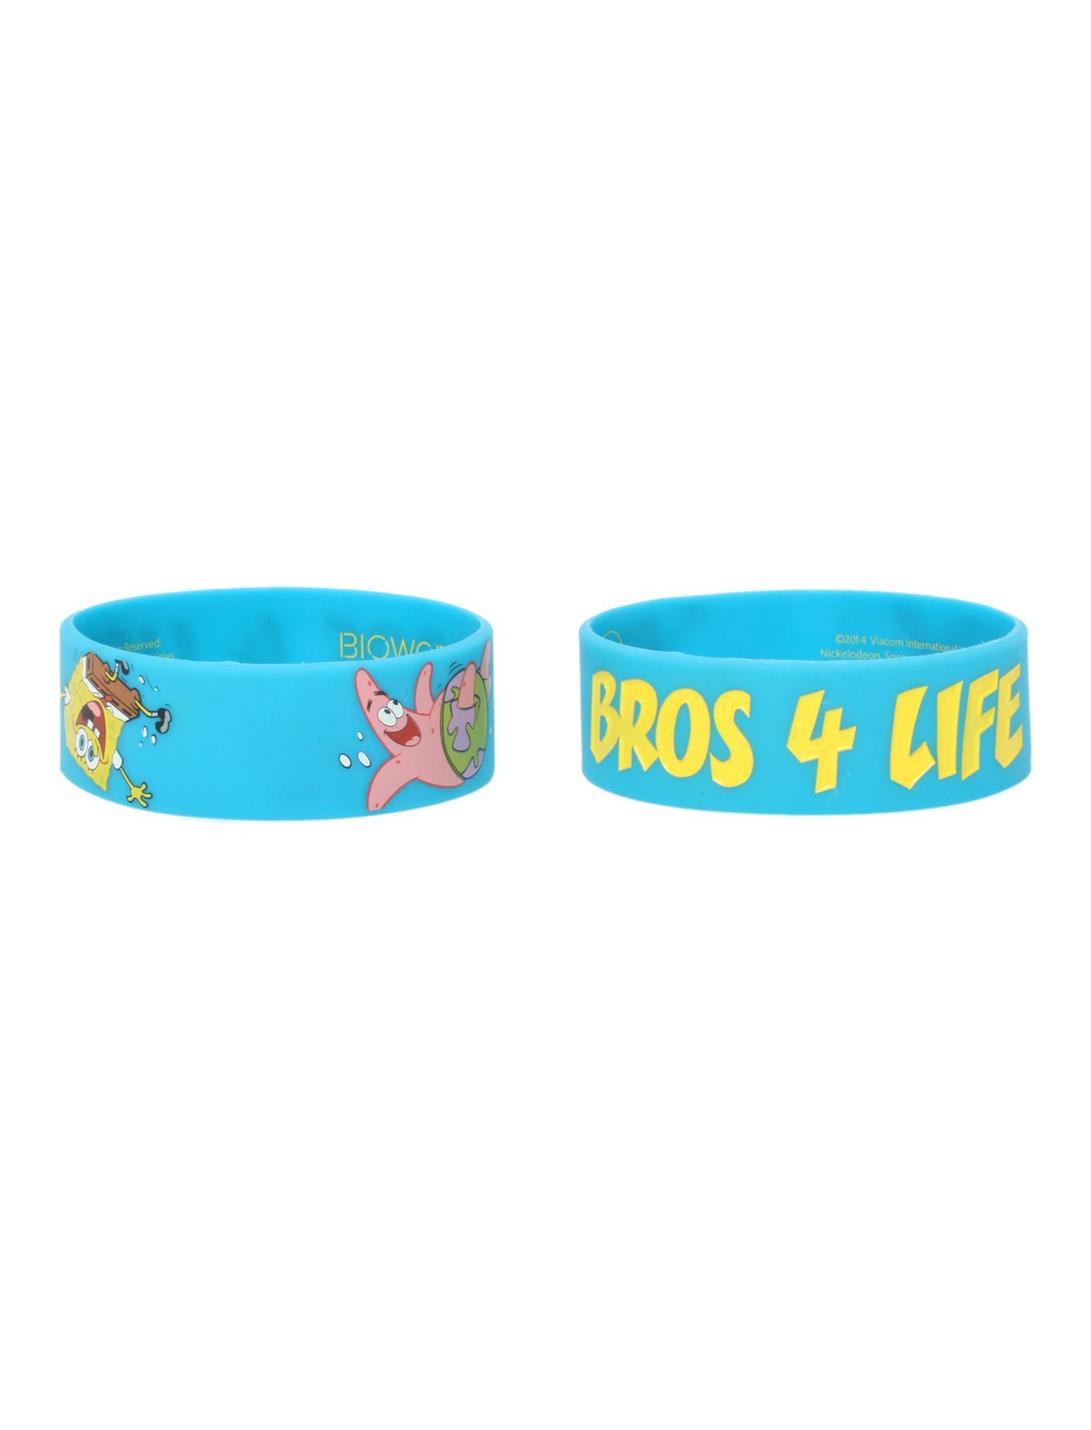 SpongeBob SquarePants Bros 4 Life Rubber Bracelet 2 Pack, , hi-res